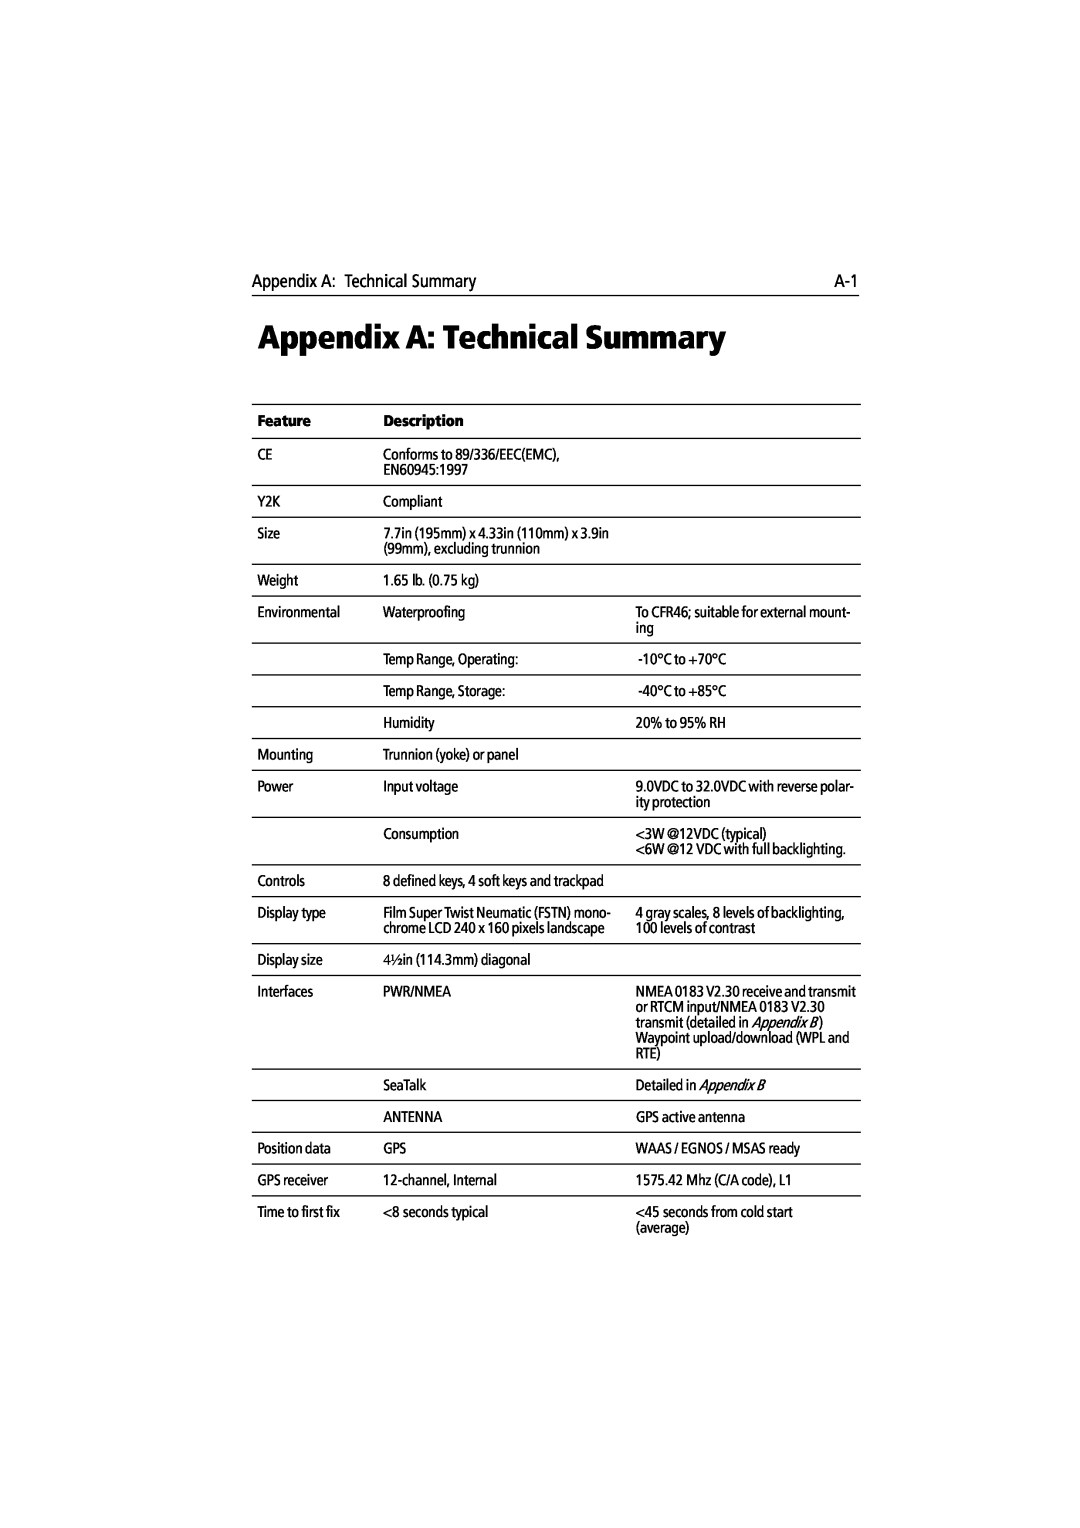 Raymarine 300 manual Appendix A Technical Summary, Feature, Description 